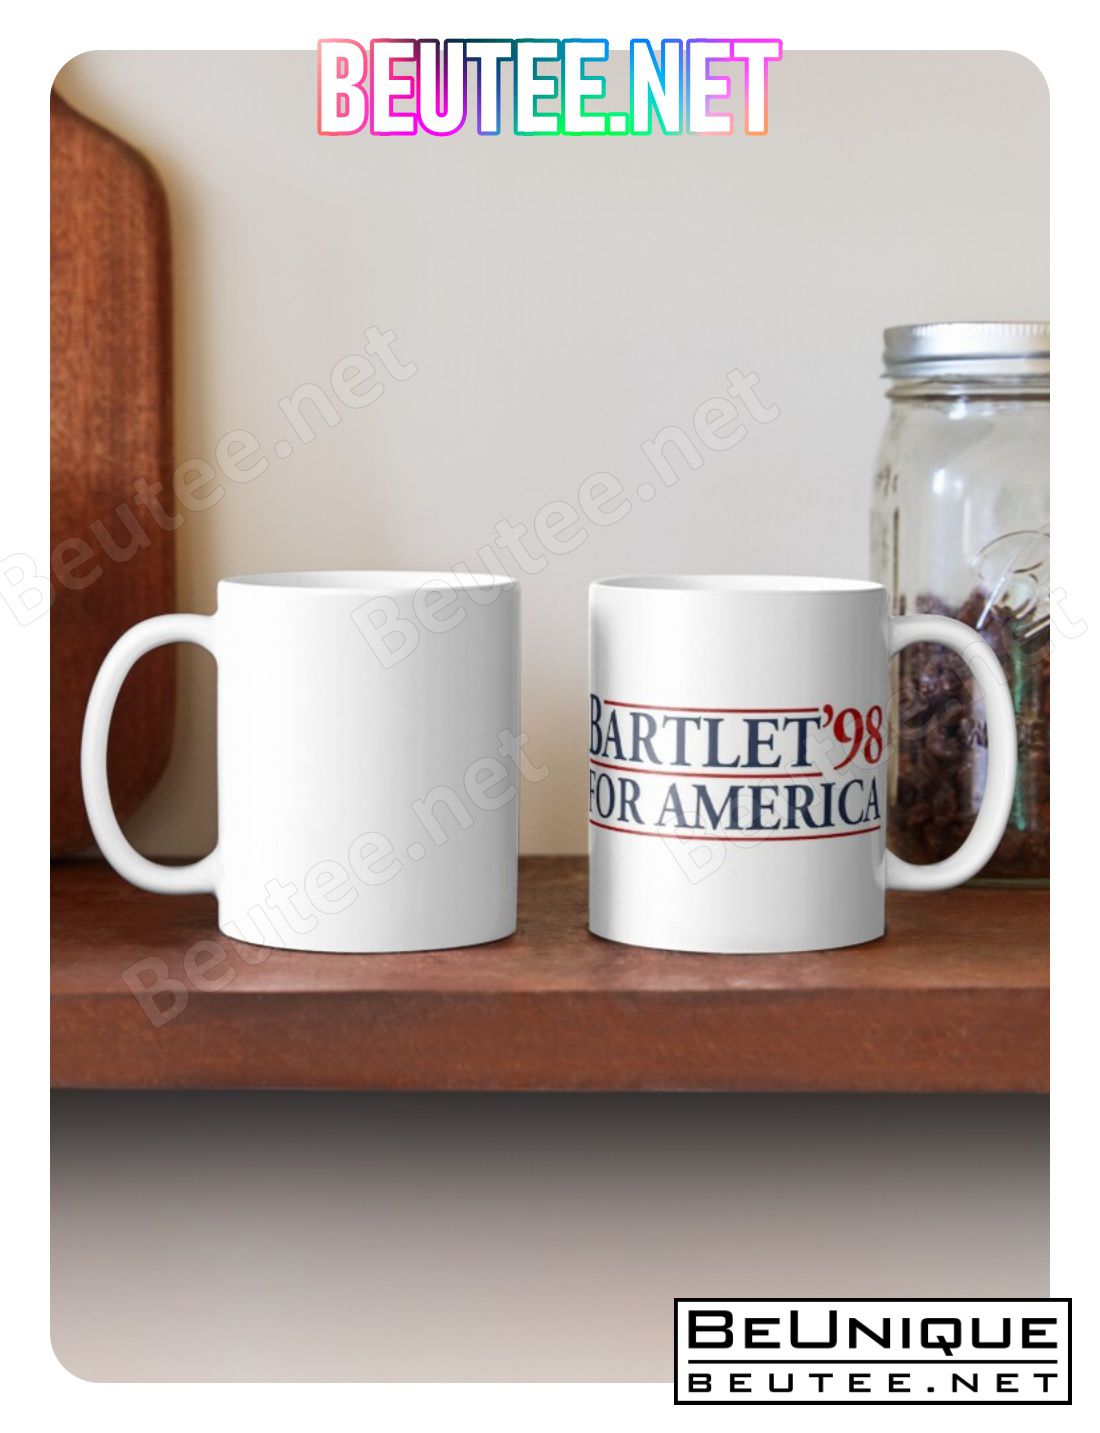 Bartlet For America Coffee Mug